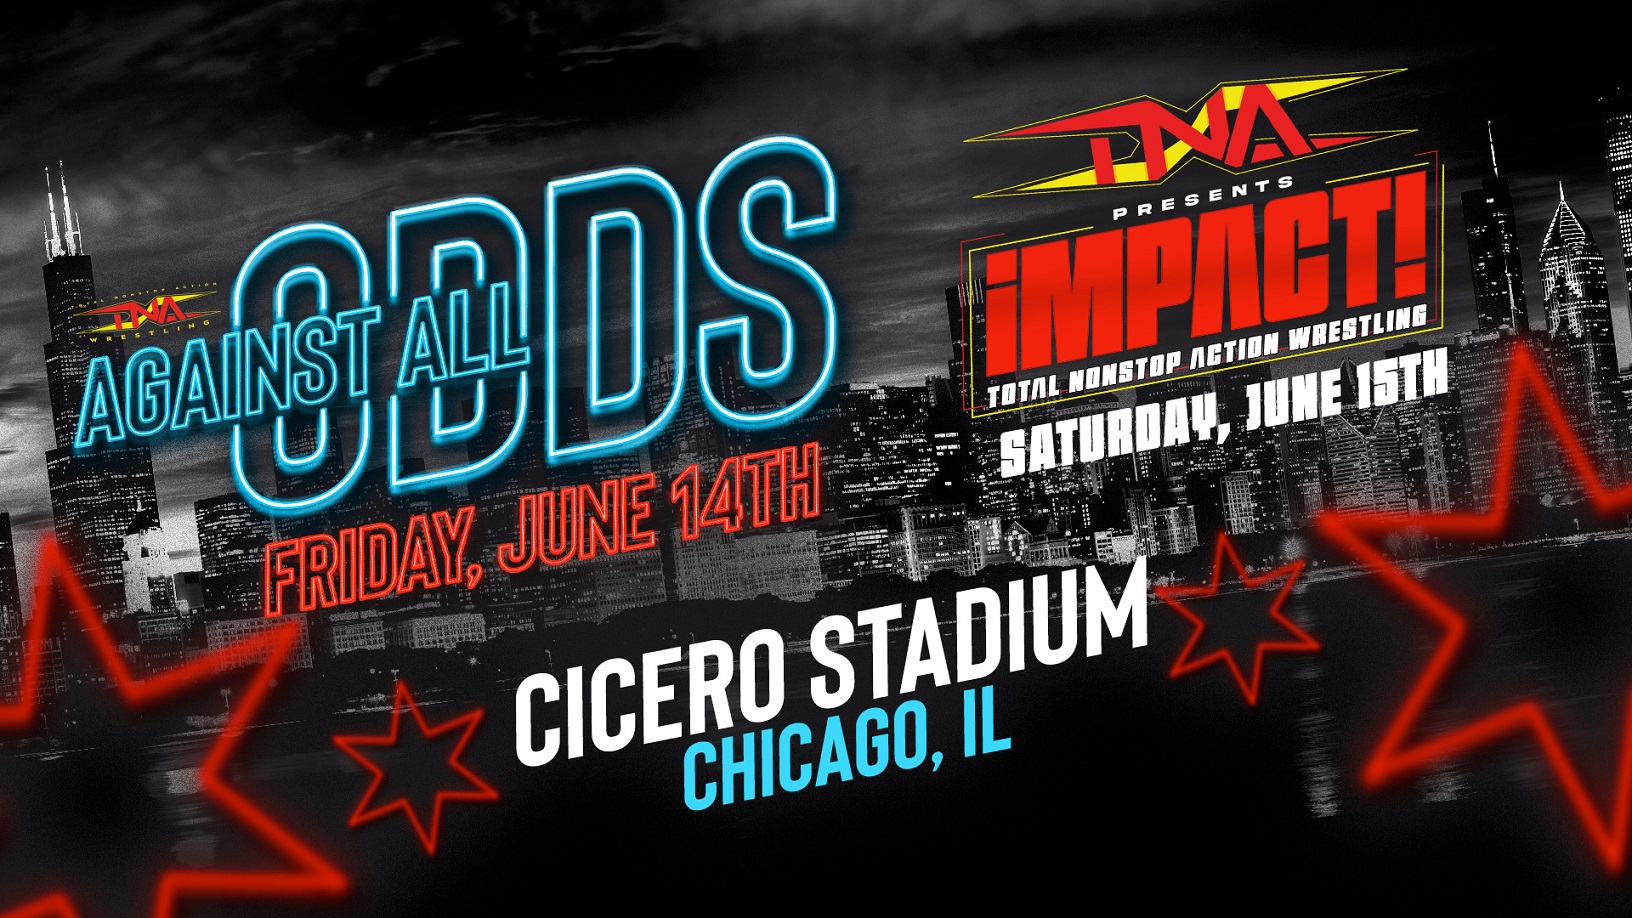 TNA Wrestling Returns To Chicago For Two Nights Of Live Pro Wrestling, June 14-15, At Cicero Stadium – TNA Wrestling